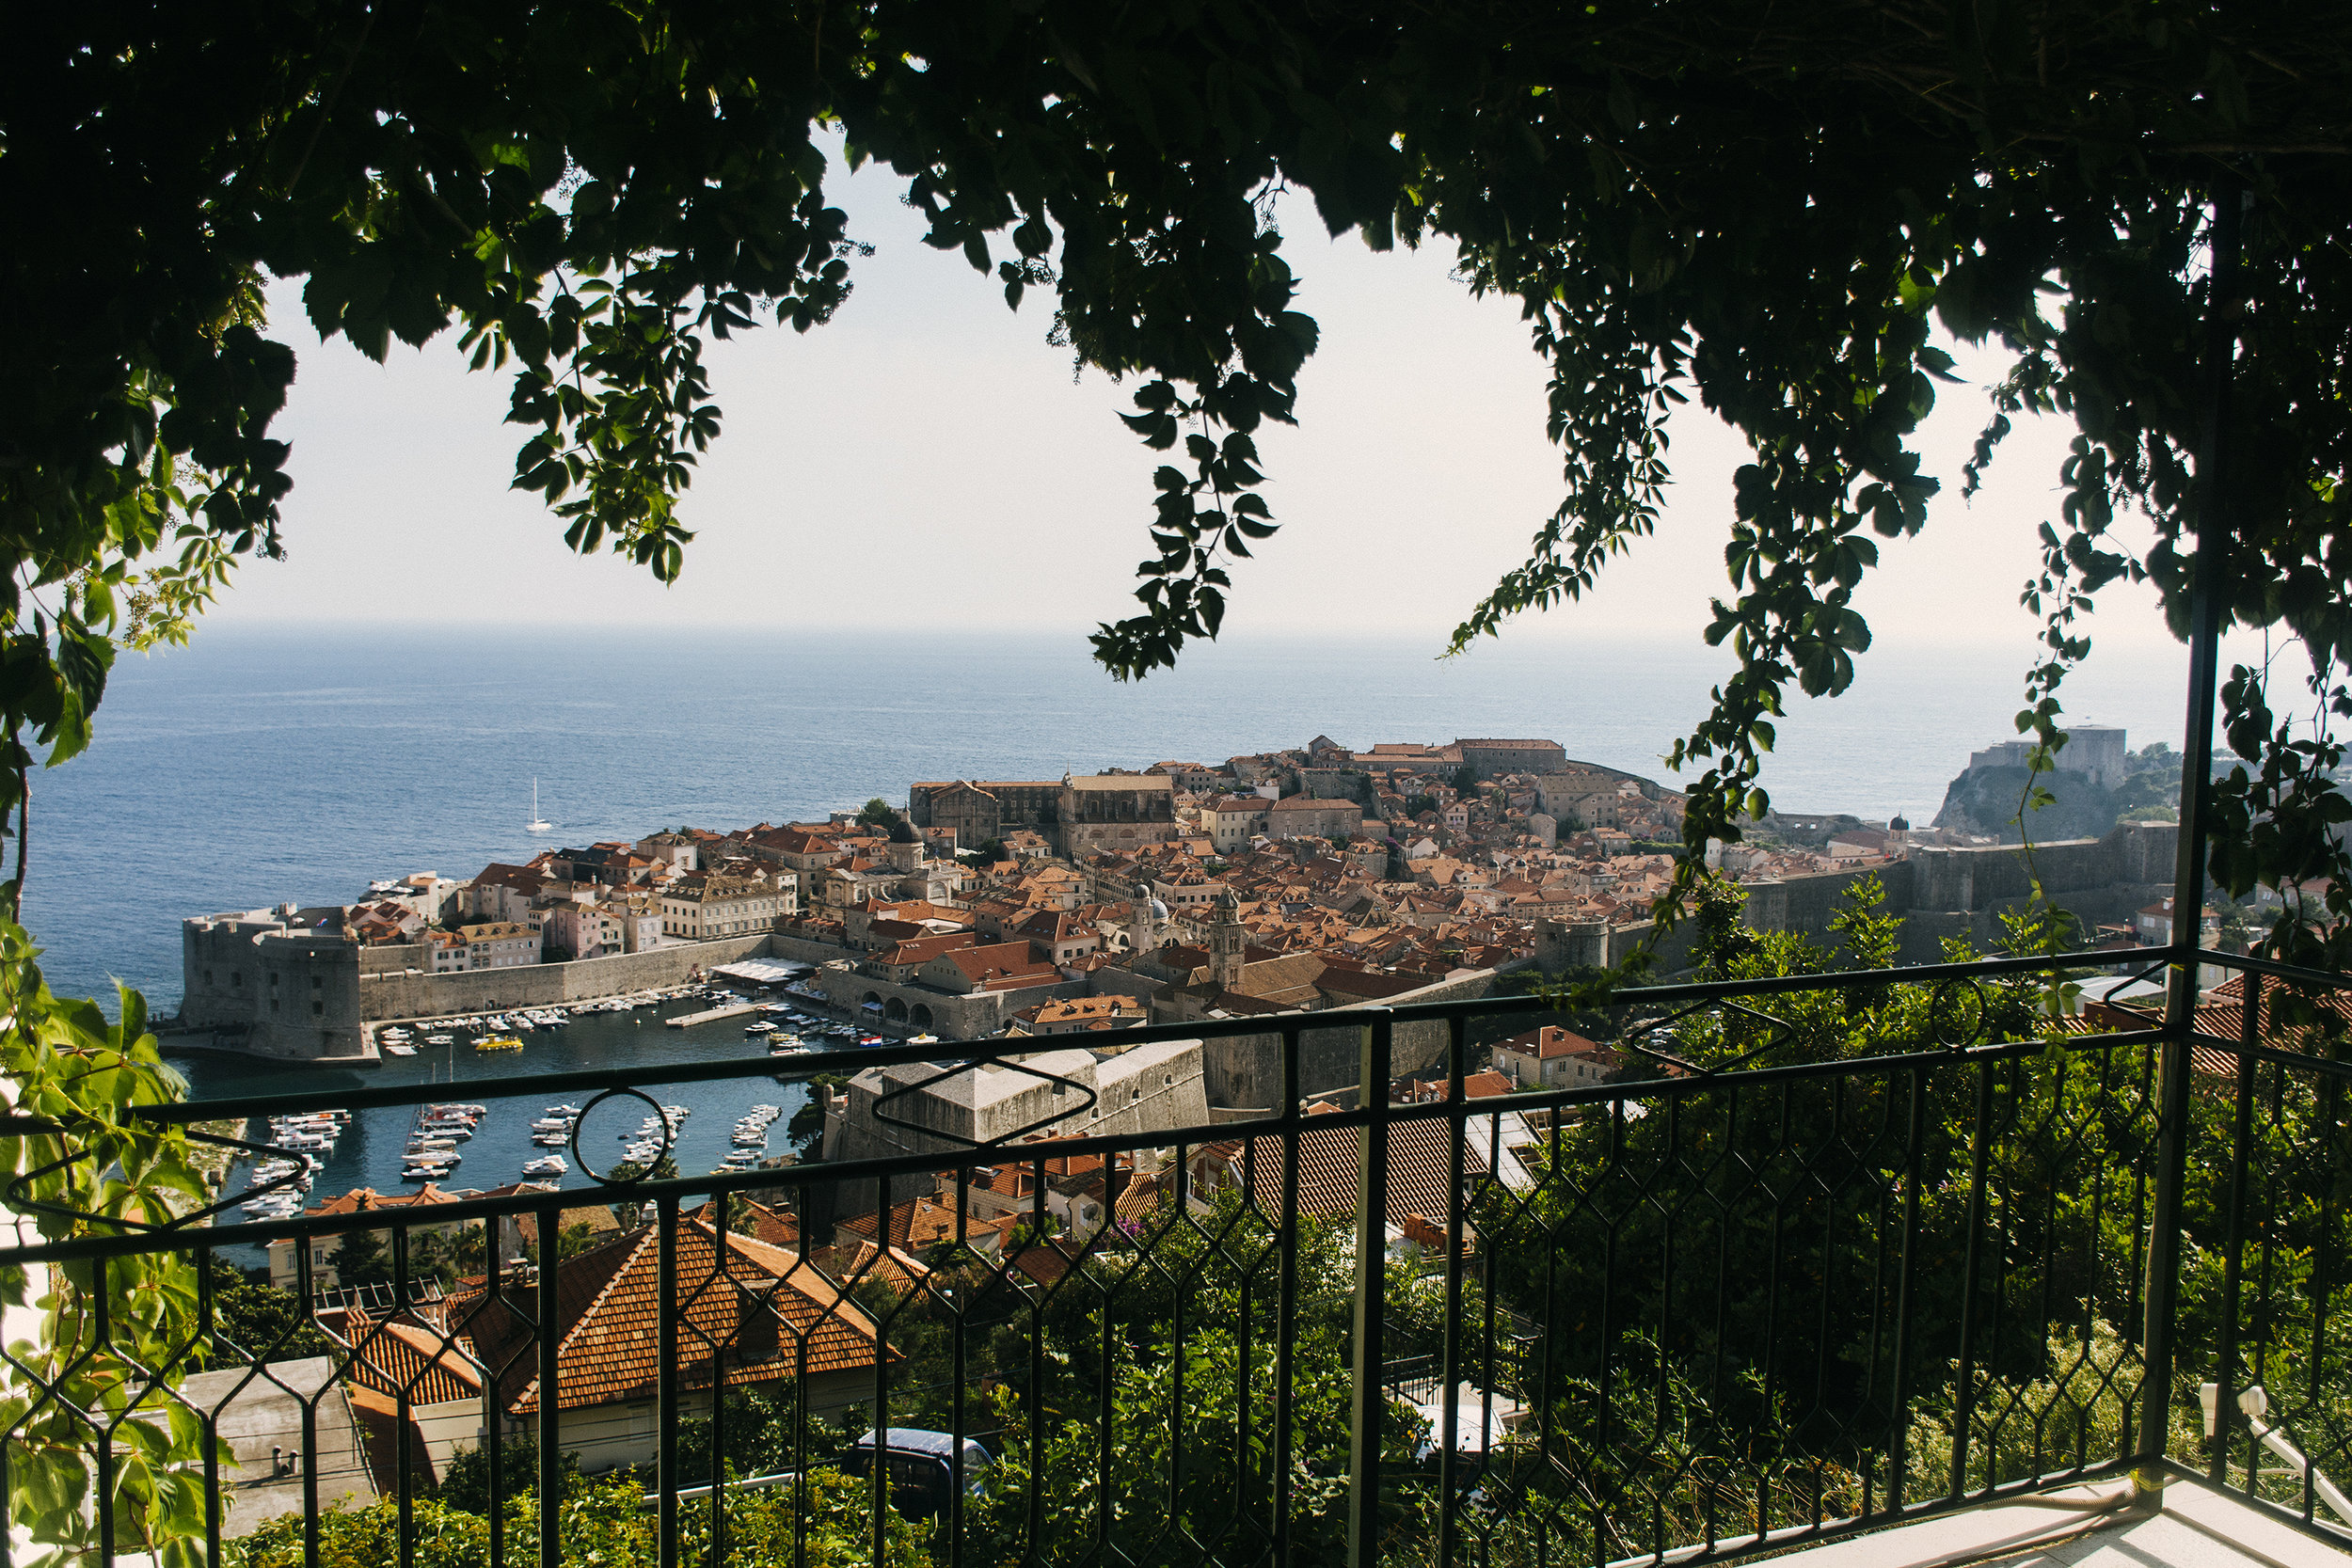 Dubrovnik Day 1